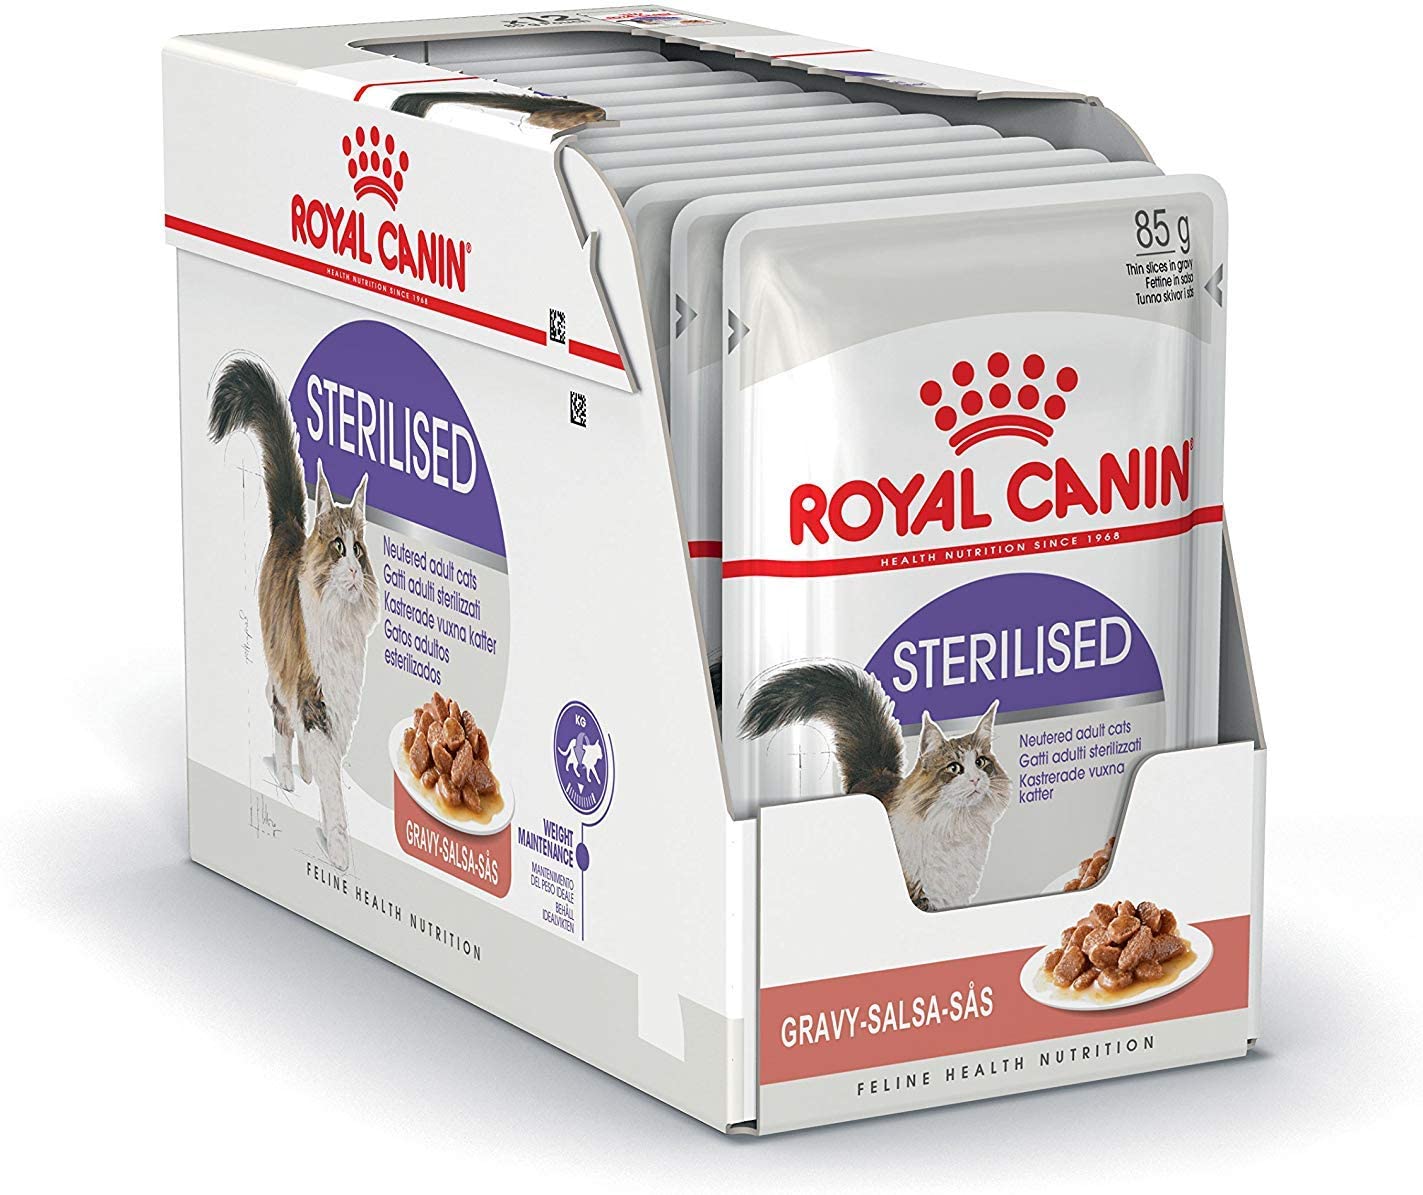  ROYAL CANIN Sterilised Comida para Gatos - Paquete de 12 x 85 gr - Total: 1020 gr 